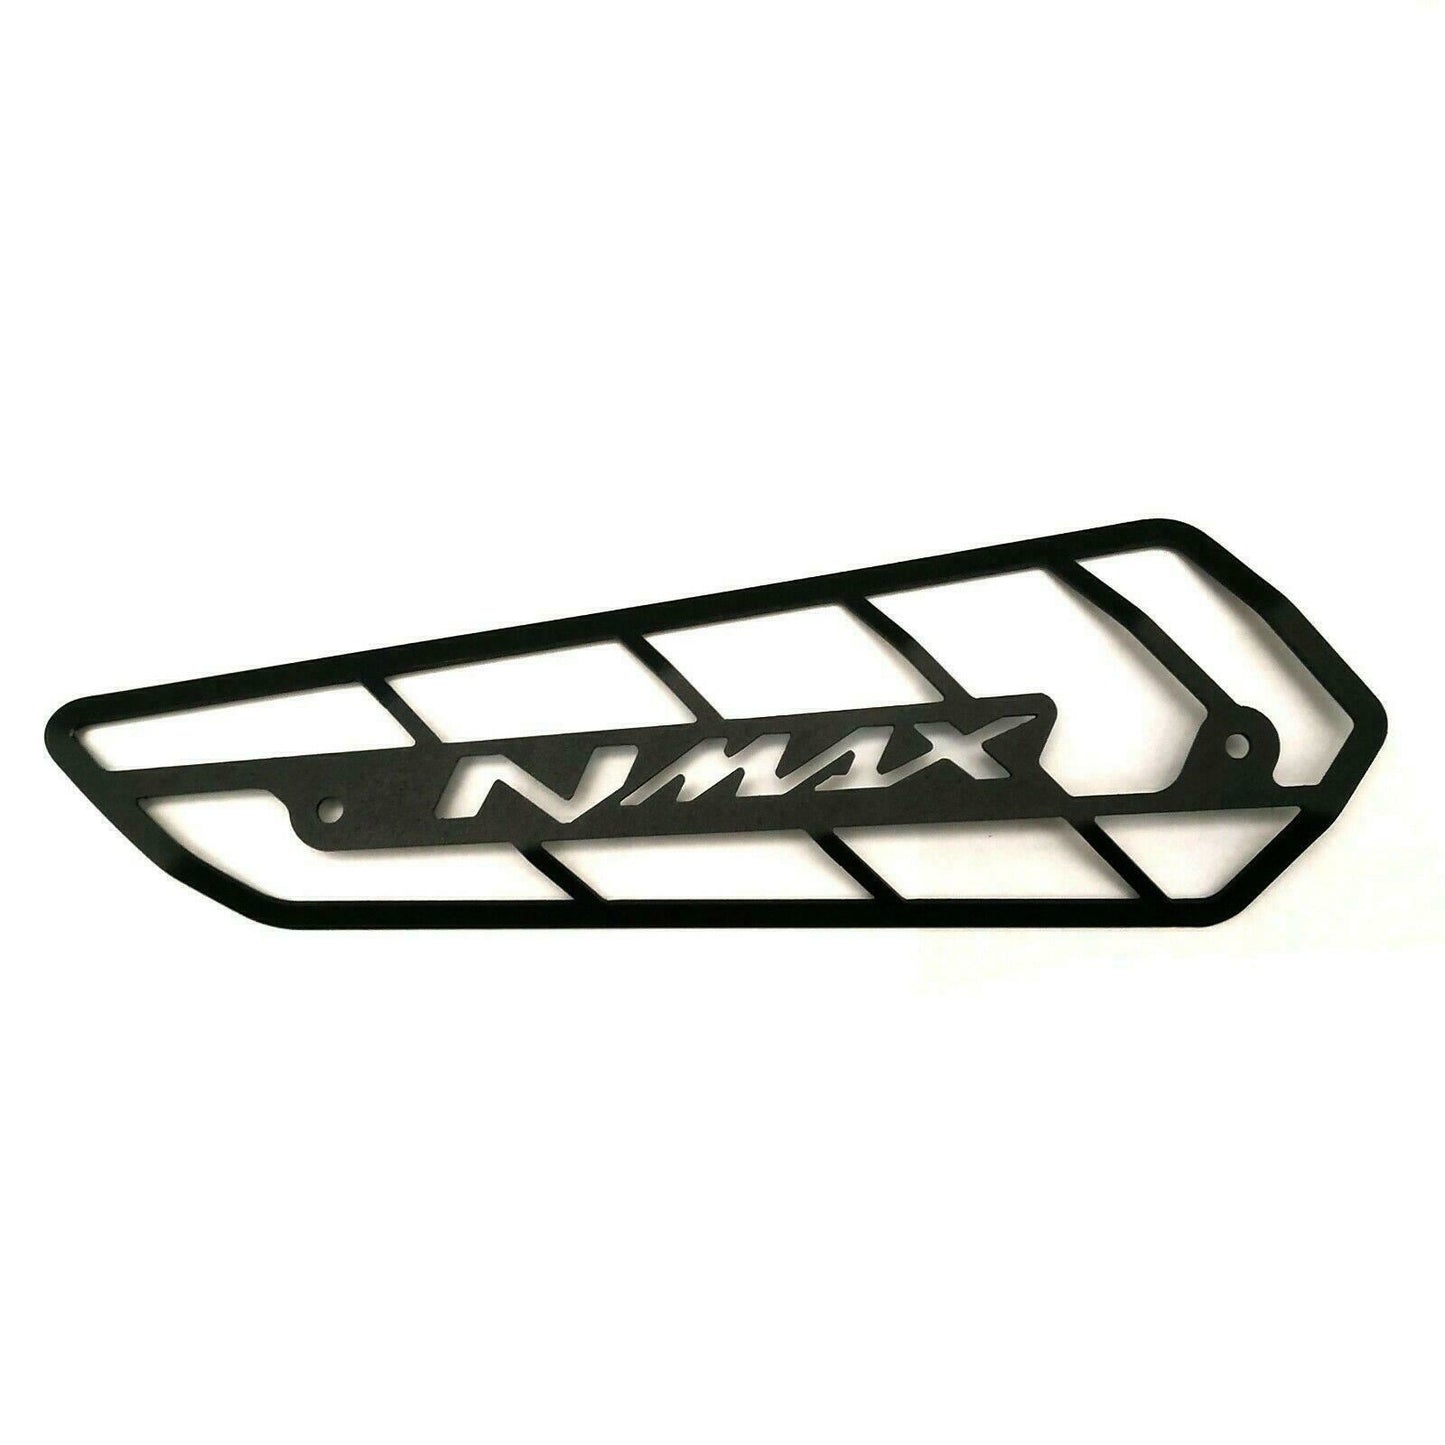 Yamaha NMAX 125 155 exhaust guard 2015-20